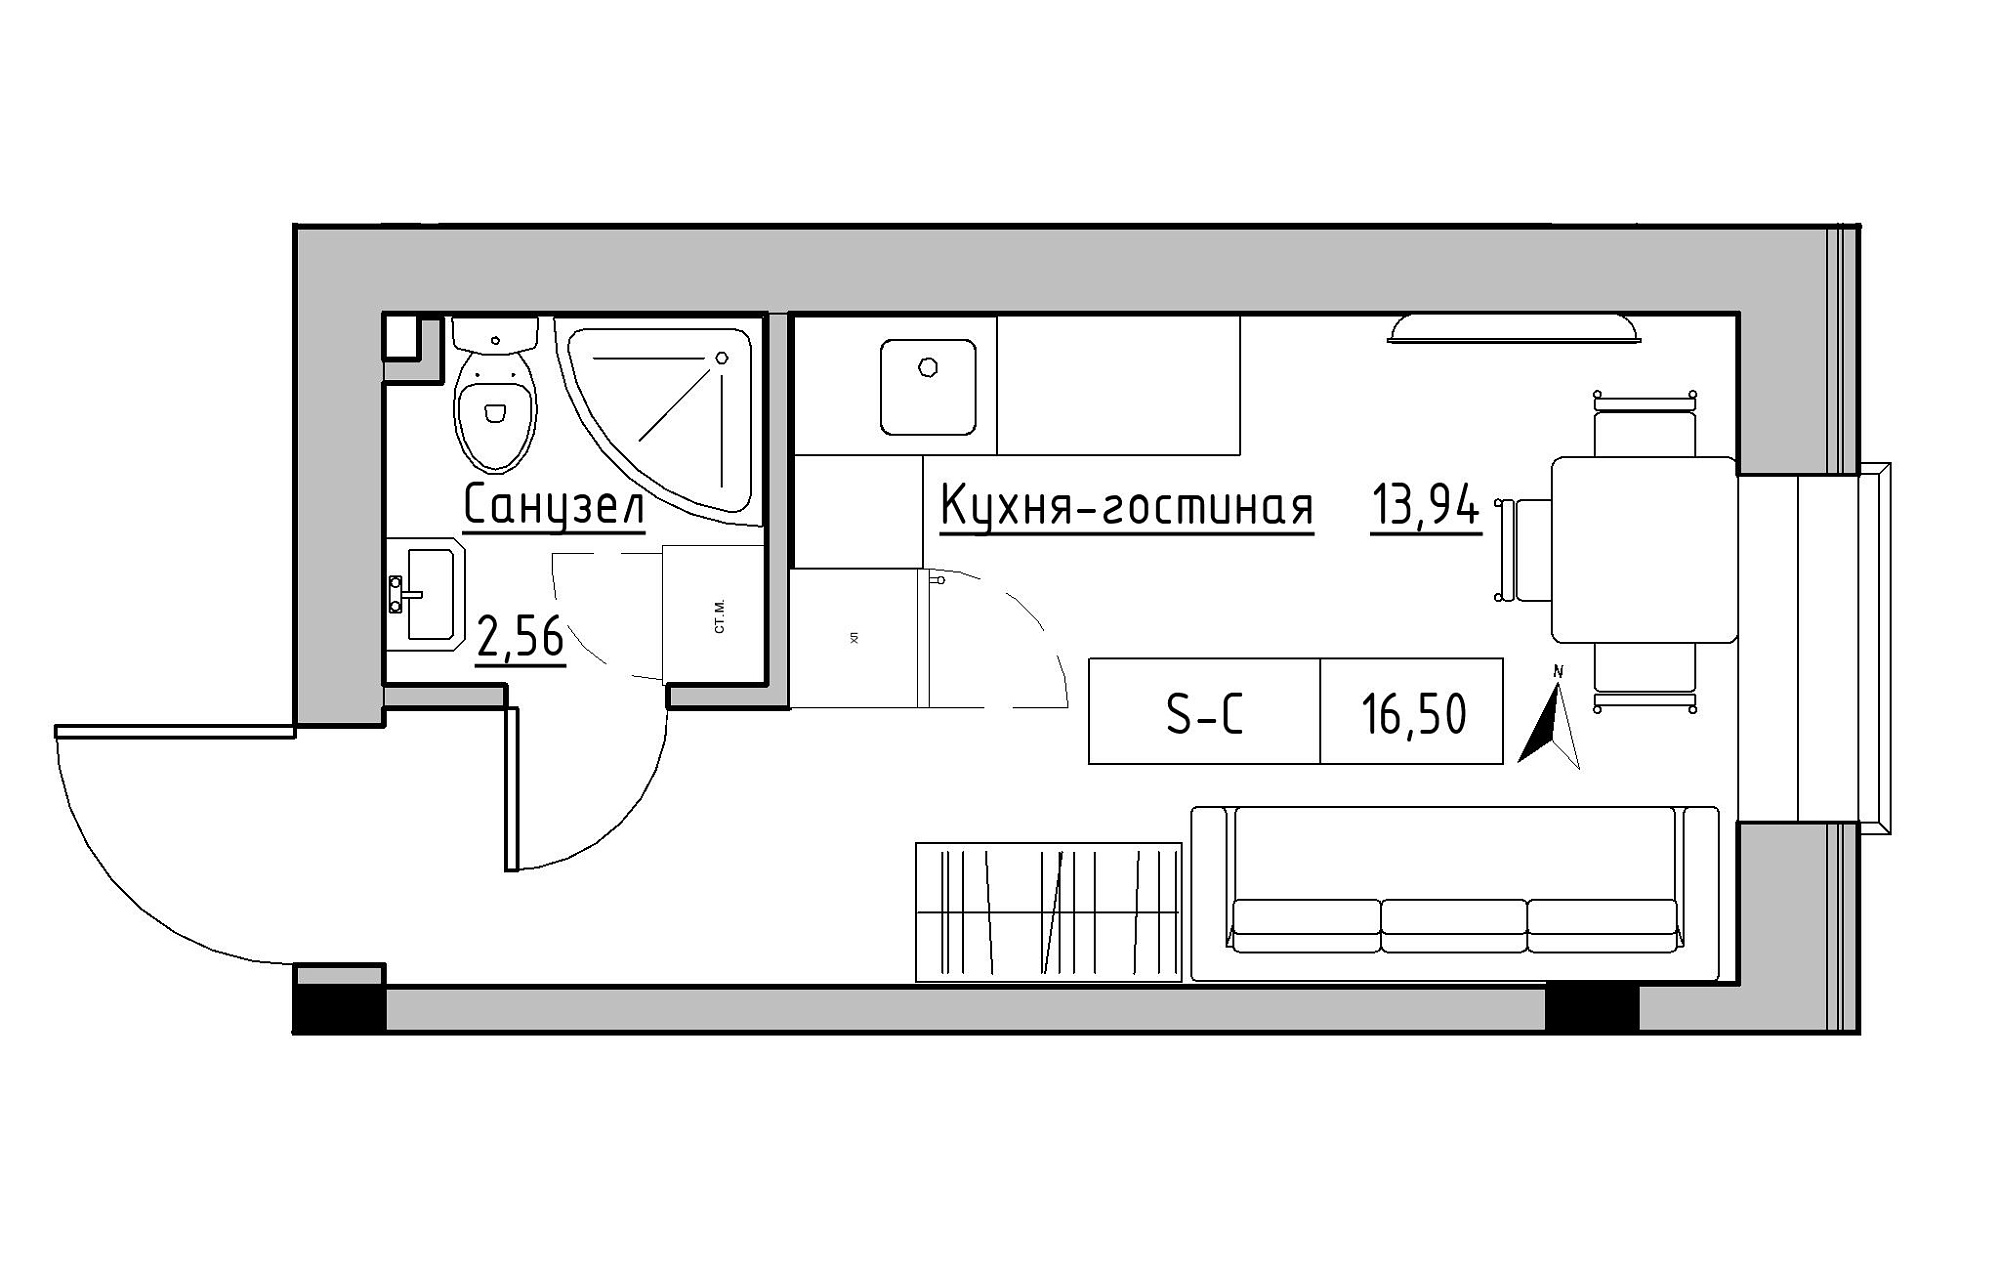 Planning Smart flats area 16.5m2, KS-019-04/0005.